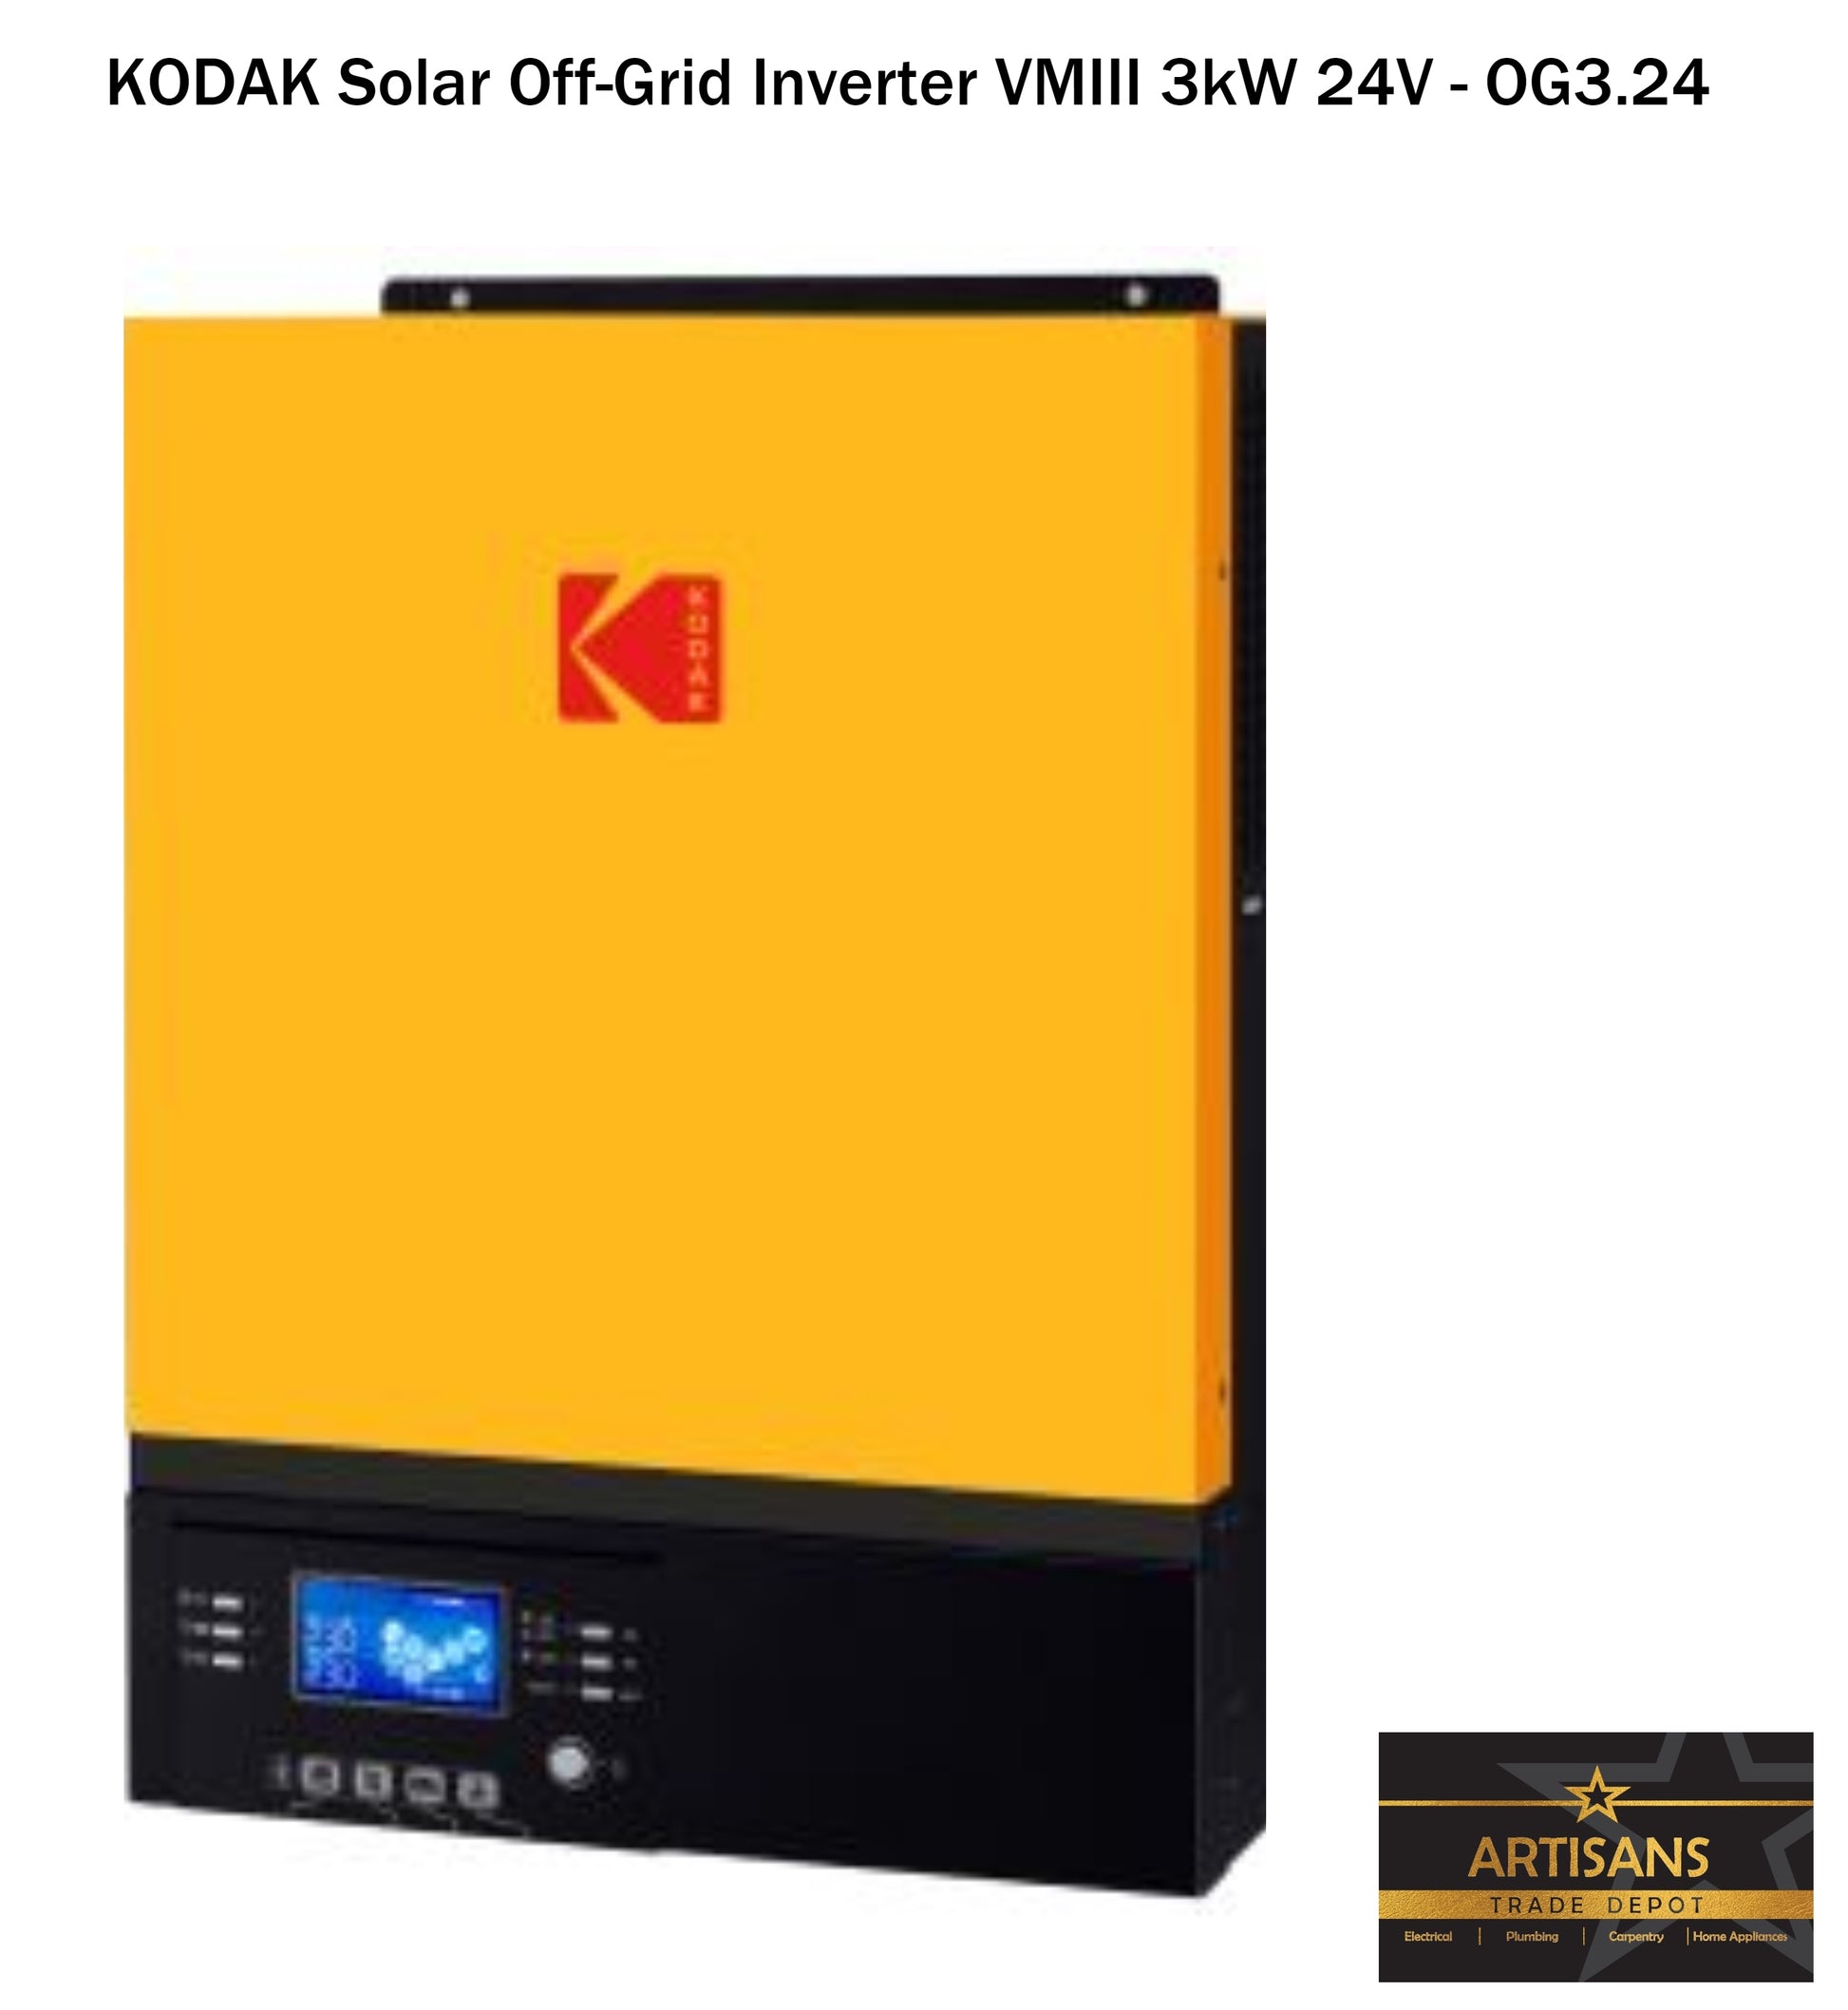 3kW Off Grid Solar Kit 2 - ECO - (PV Panels, Inverter & AGM Lead Acid Battery) - Artisans Trade Depot